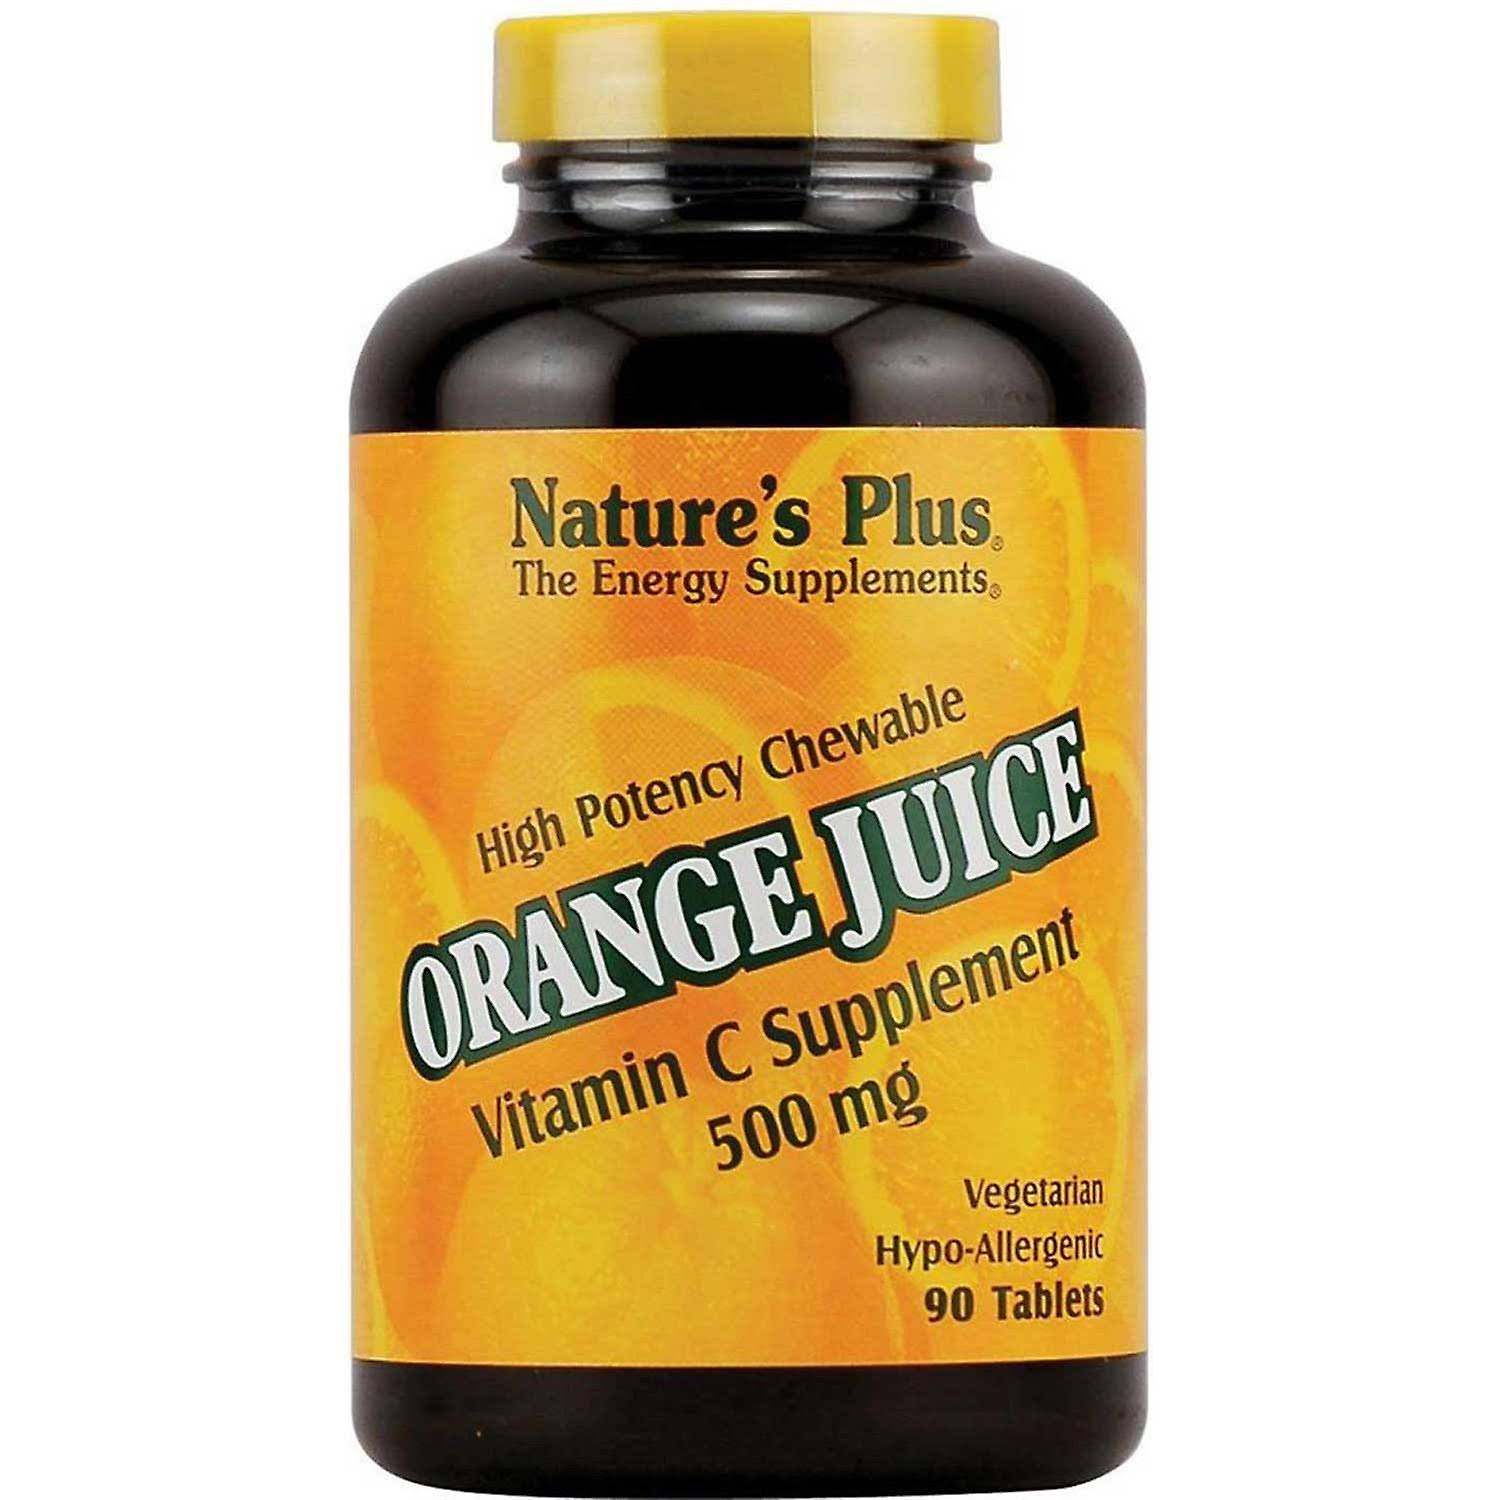 Nature's Plus Orange Juice Vitamin C Supplement - 500 mg, 90 Chewable Tablets